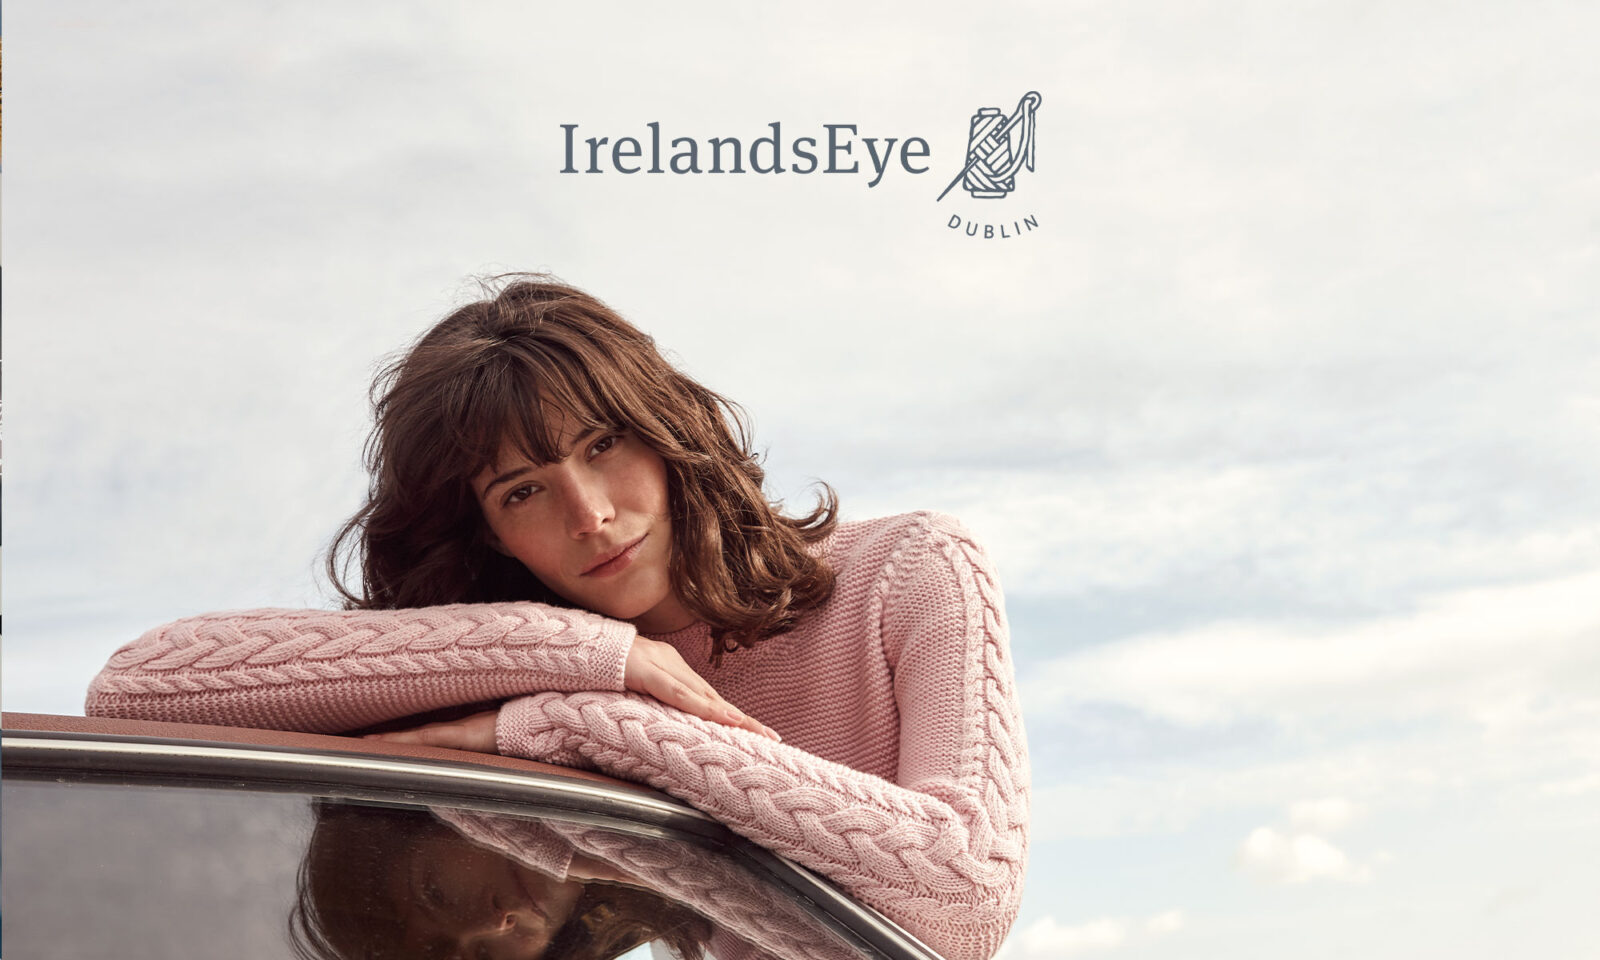 Irelands Eye Design, Neworld for brand strategy, design, packaging, and digital needs